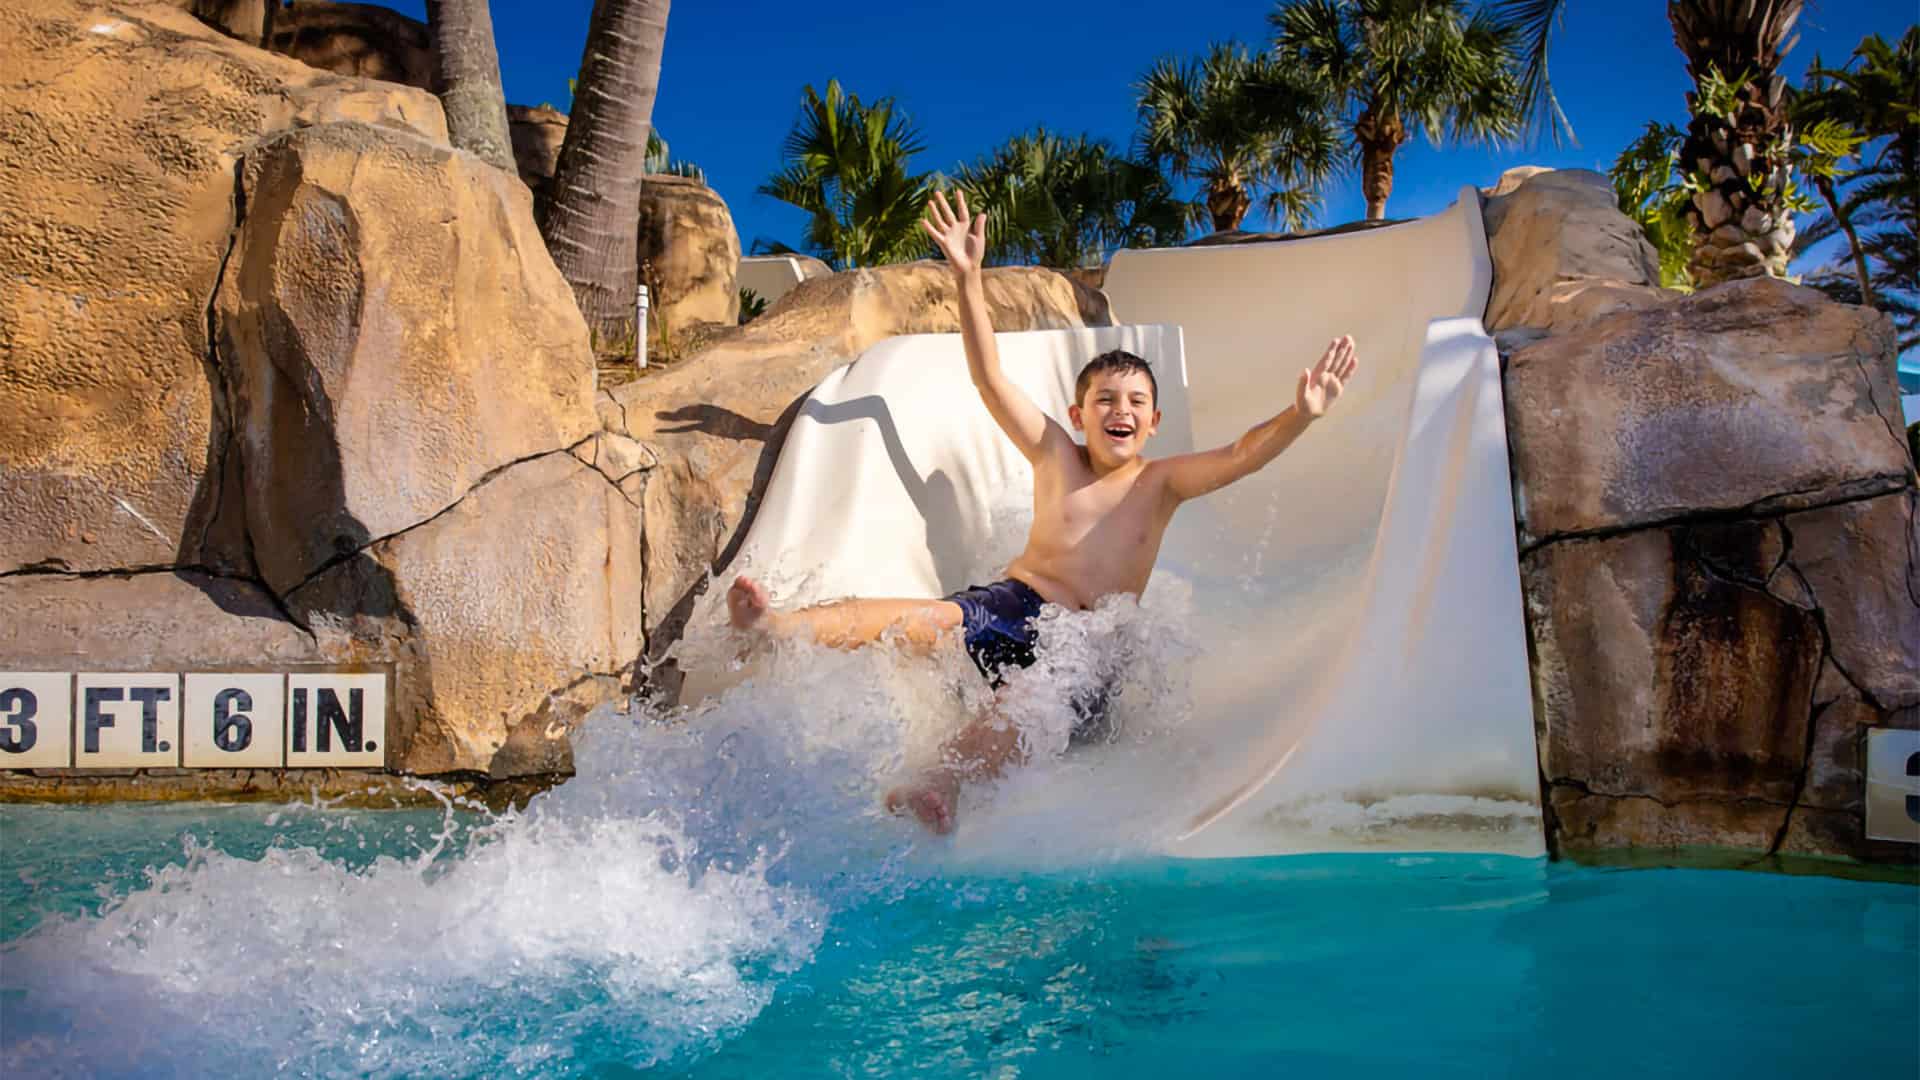 Bear’s Den Resort Orlando water park: Young boy smiles while riding a water slide.